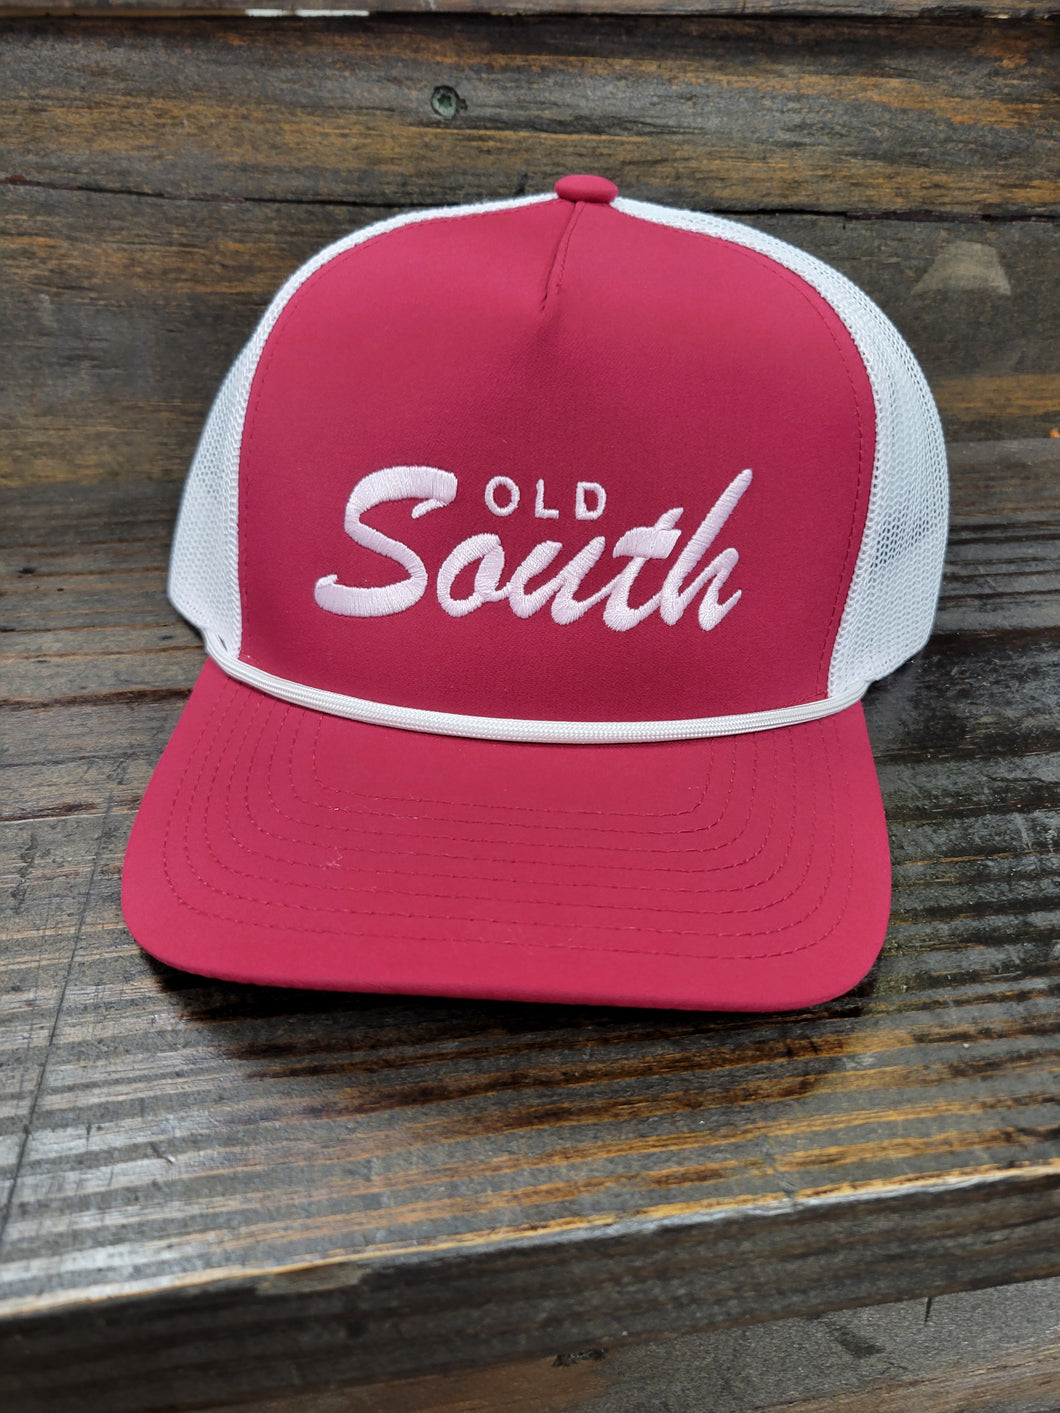 Old South Scriptured Trucker Hat